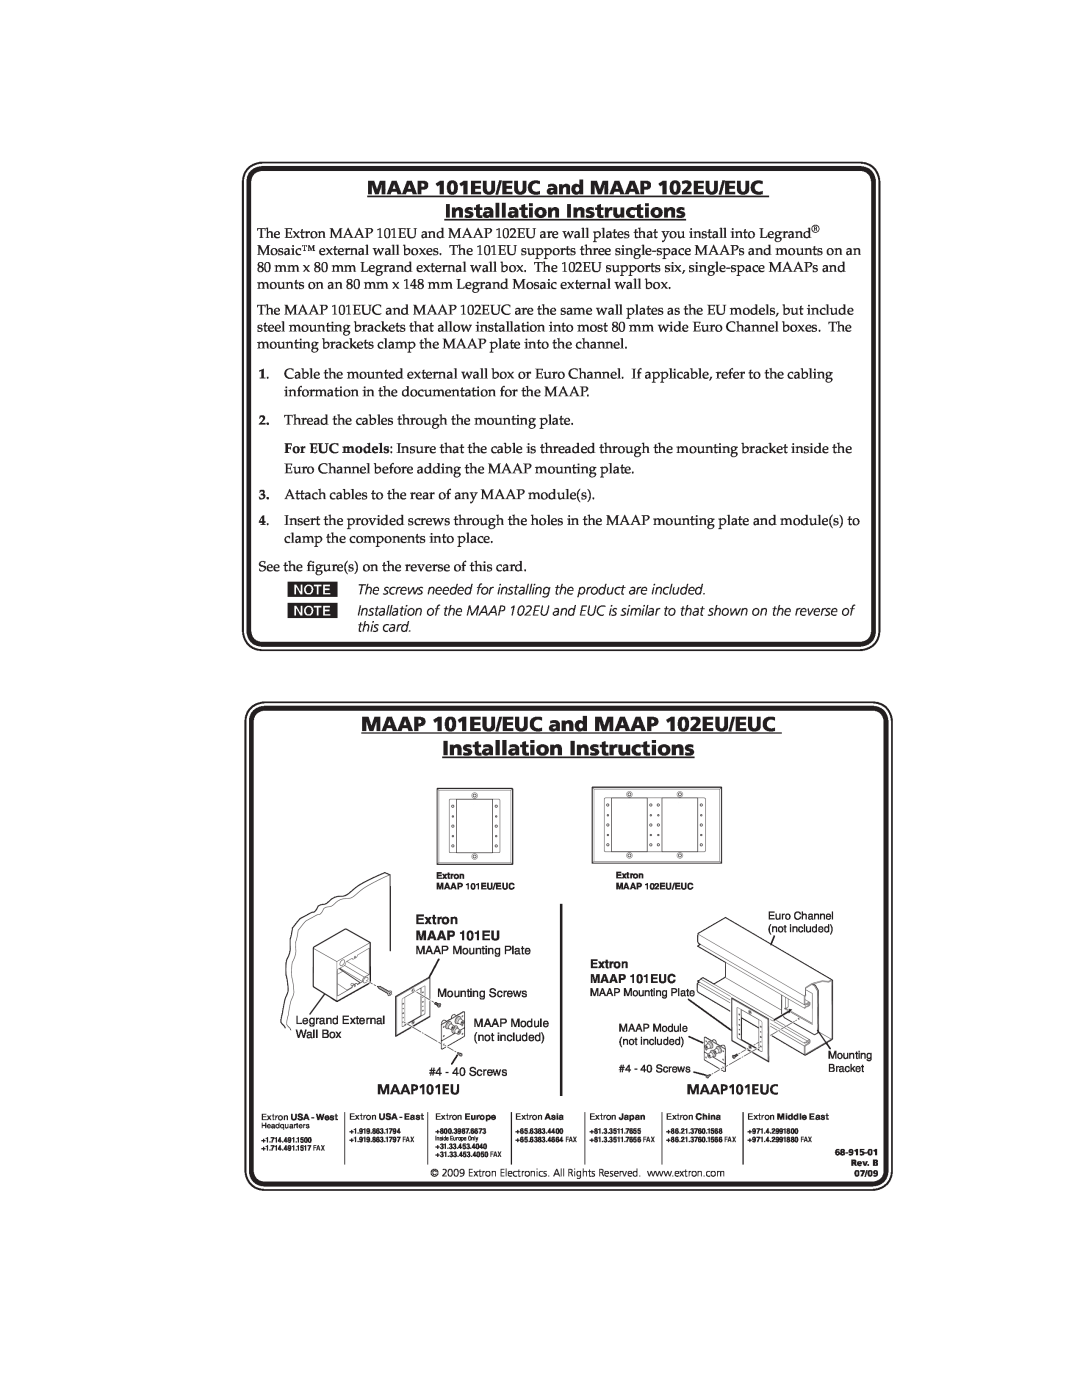 Extron electronic installation instructions MAAP 101EU/EUC and MAAP 102EU/EUC Installation Instructions, MAAP101EU 